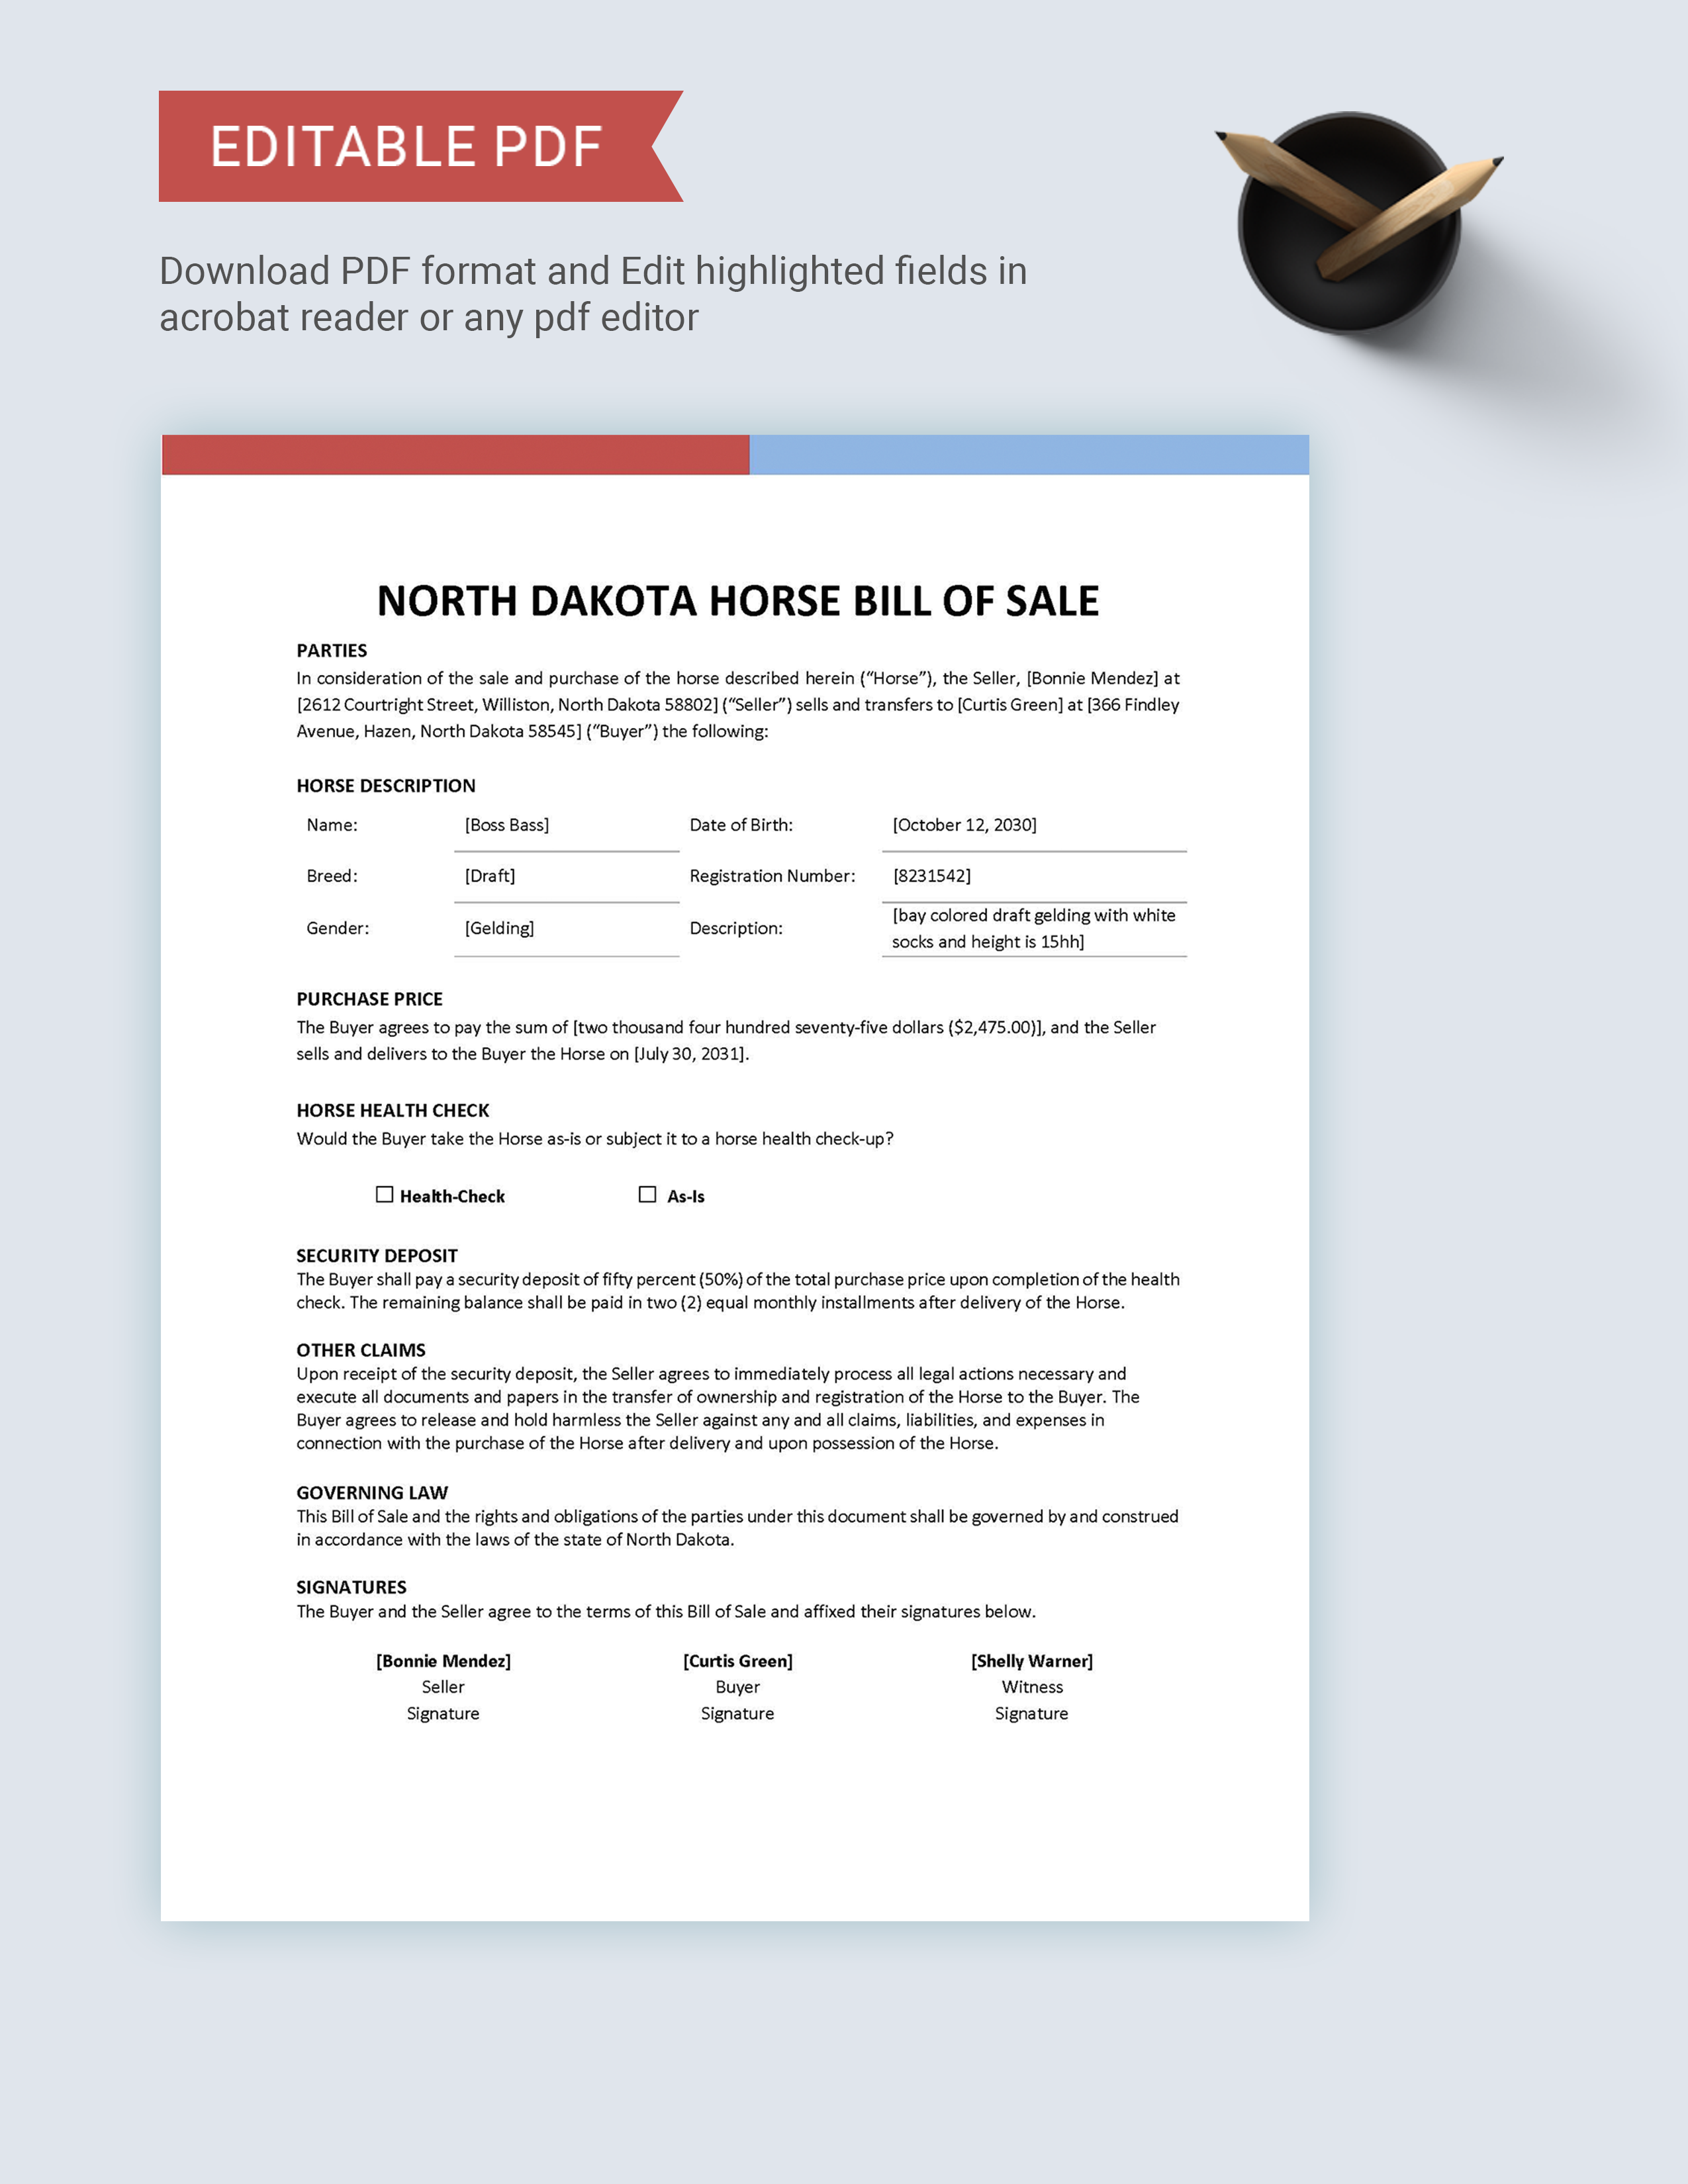 North Dakota Horse Bill of Sale Template